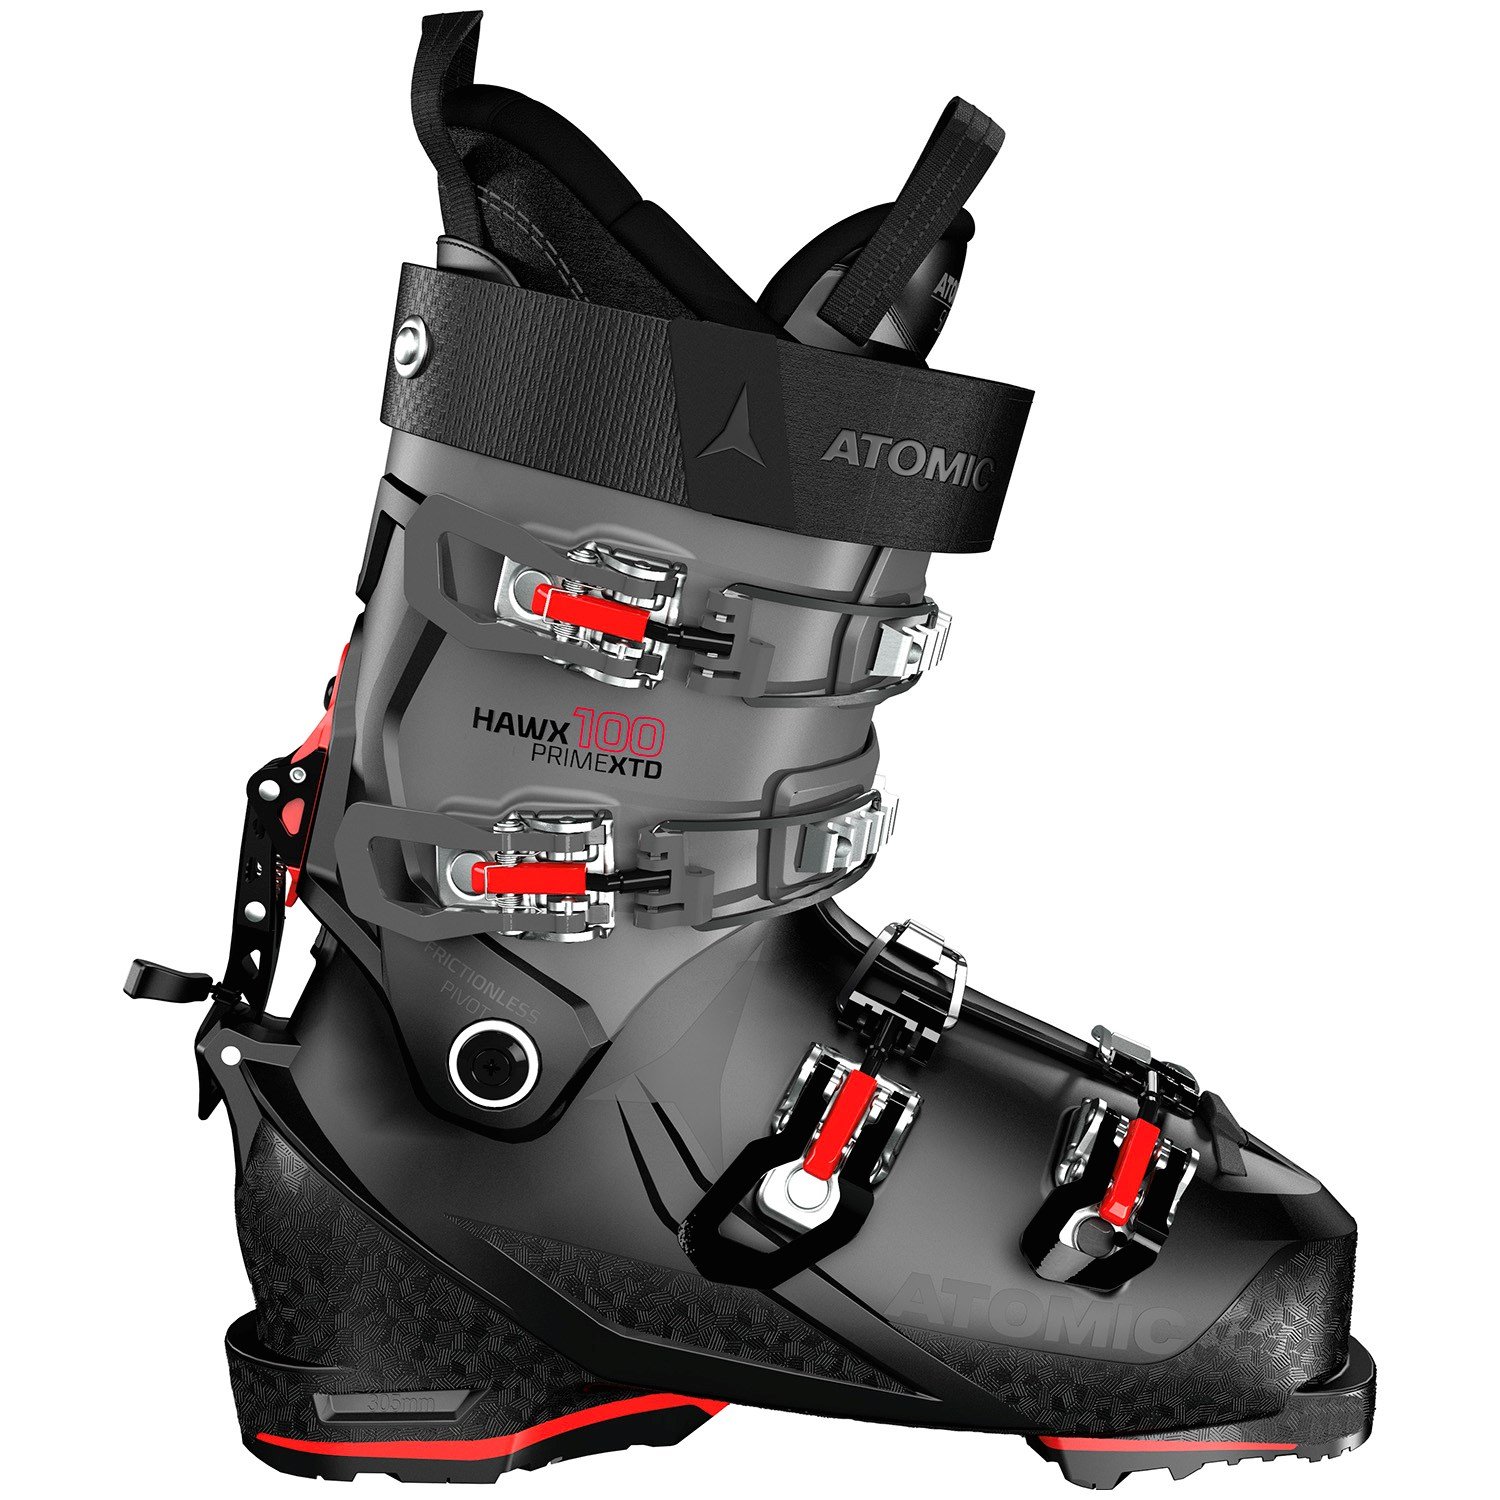 Atomic Hawx Prime XTD 100 GW Ski Boots 2021 | evo